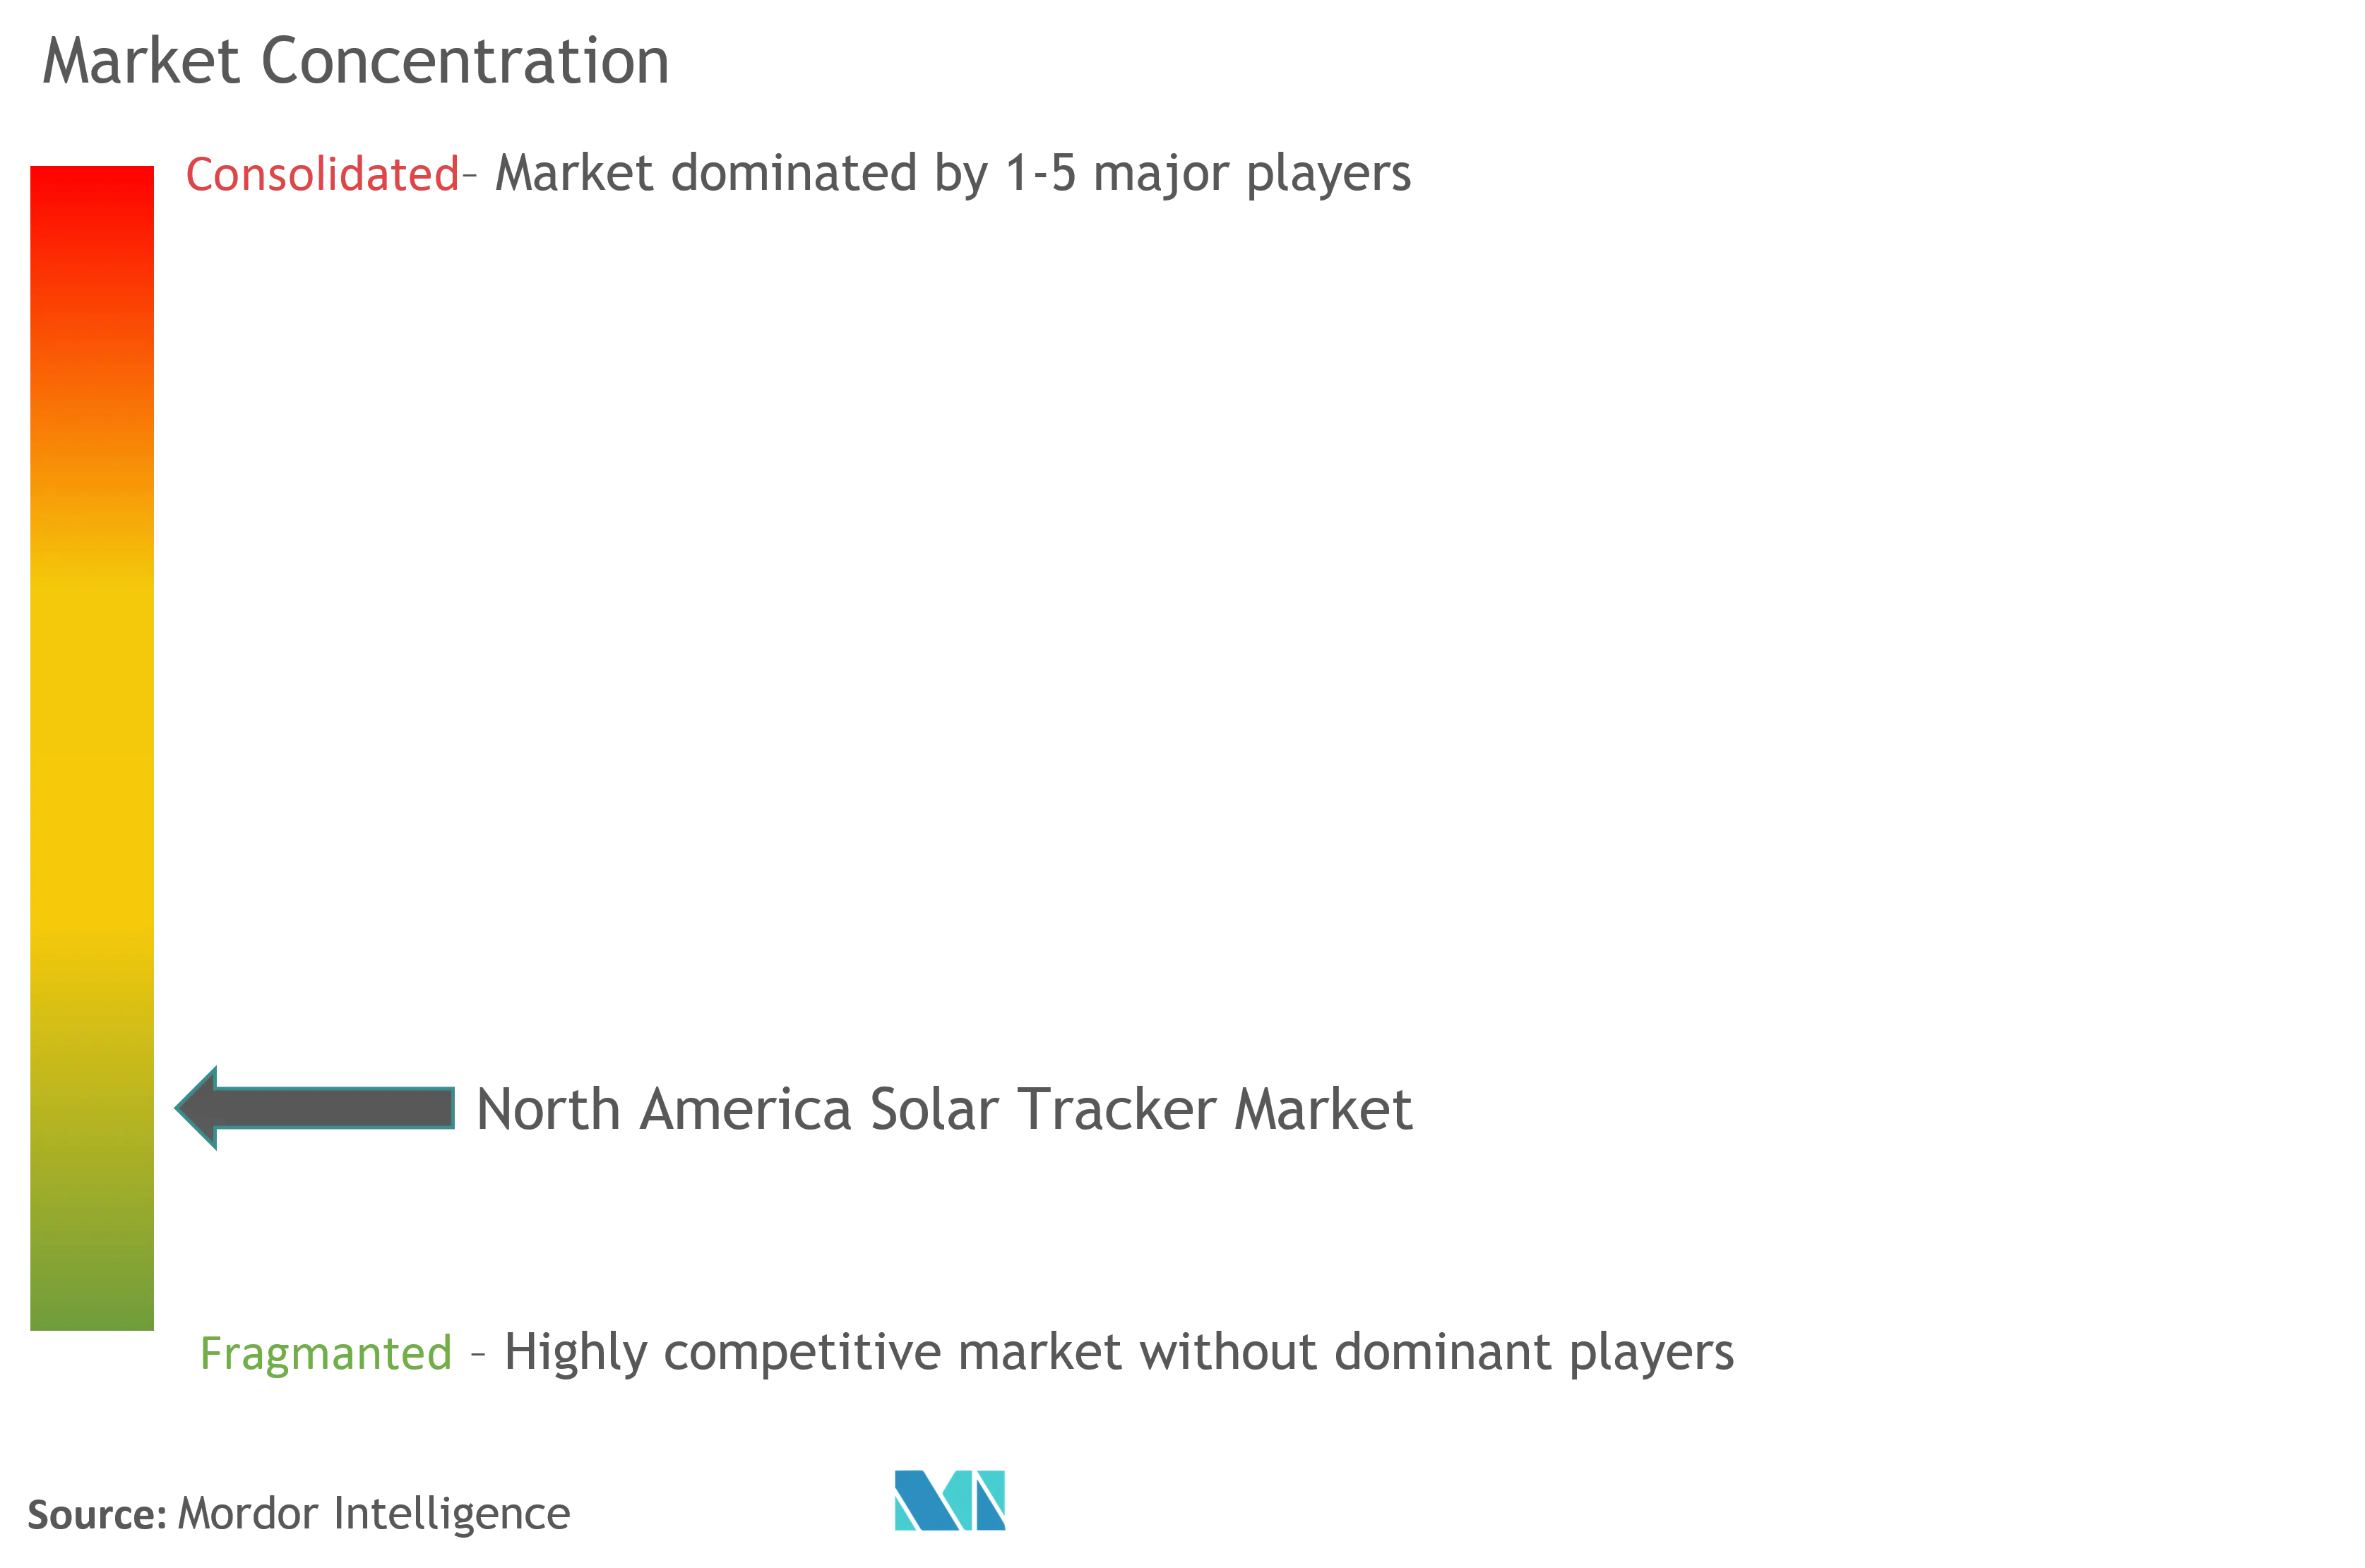 North America Solar Tracker Market Concentration